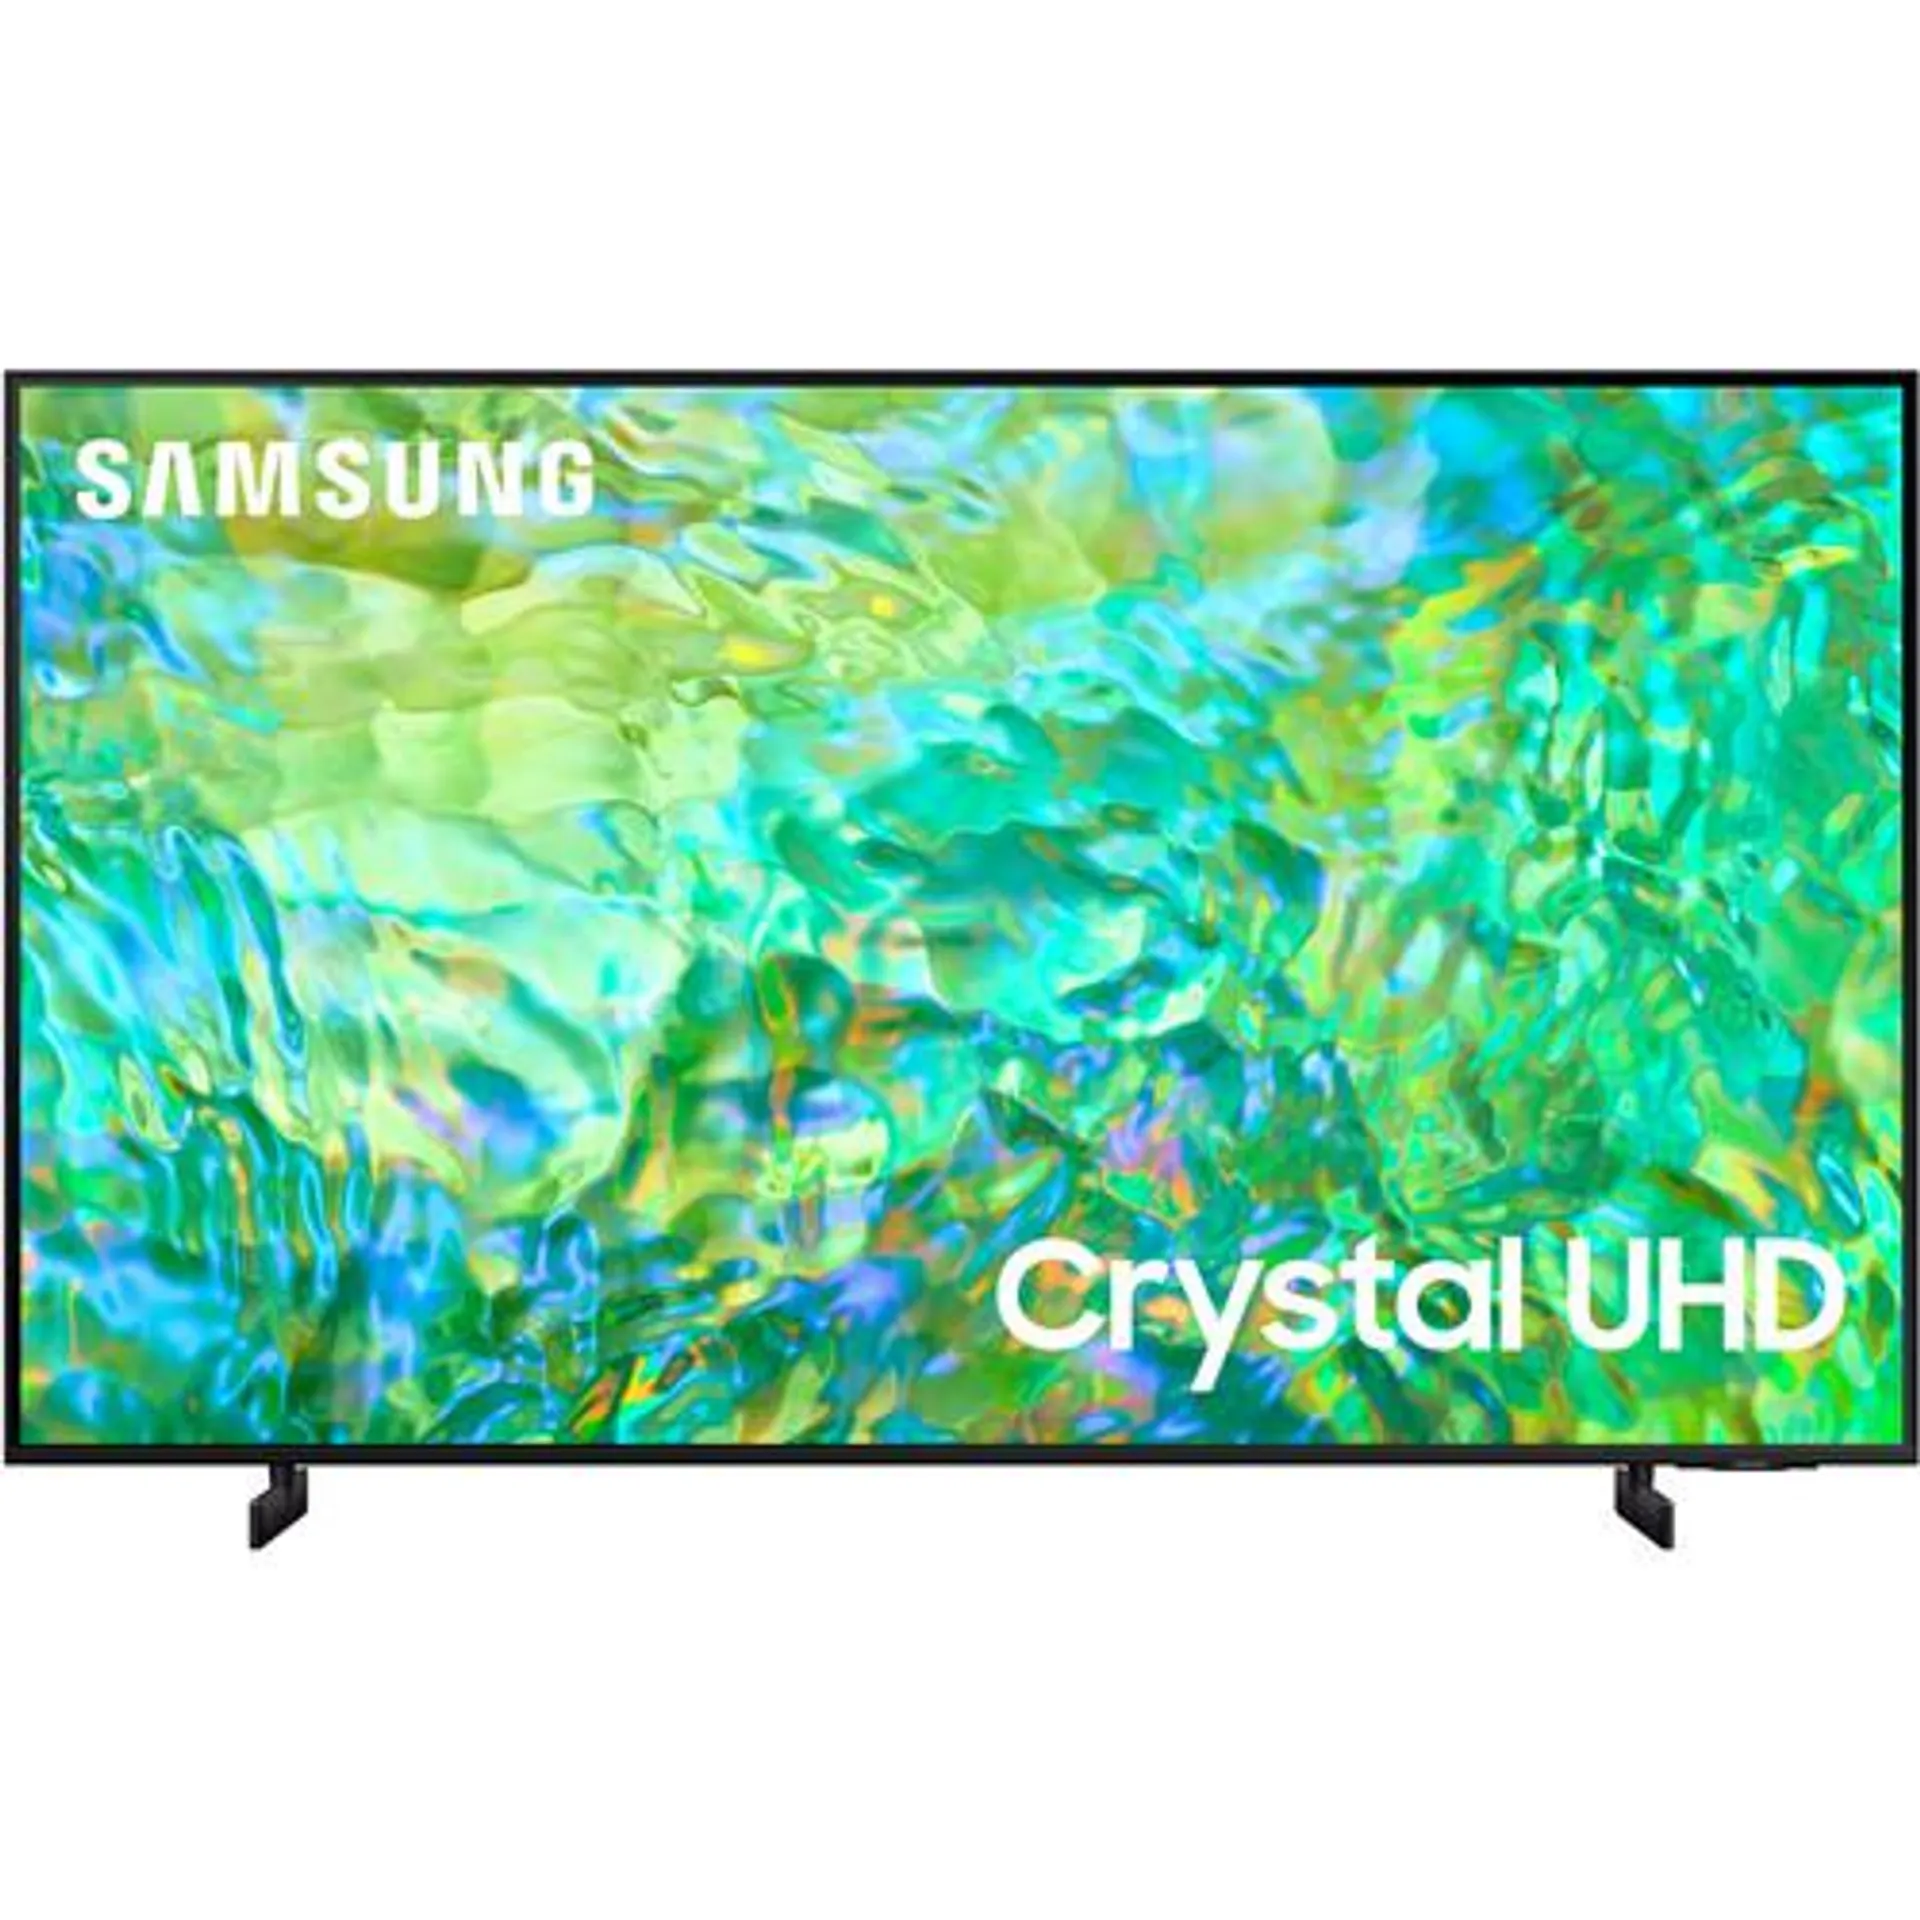 Samsung CU8000 Crystal UHD 65" 4K HDR Smart LED TV